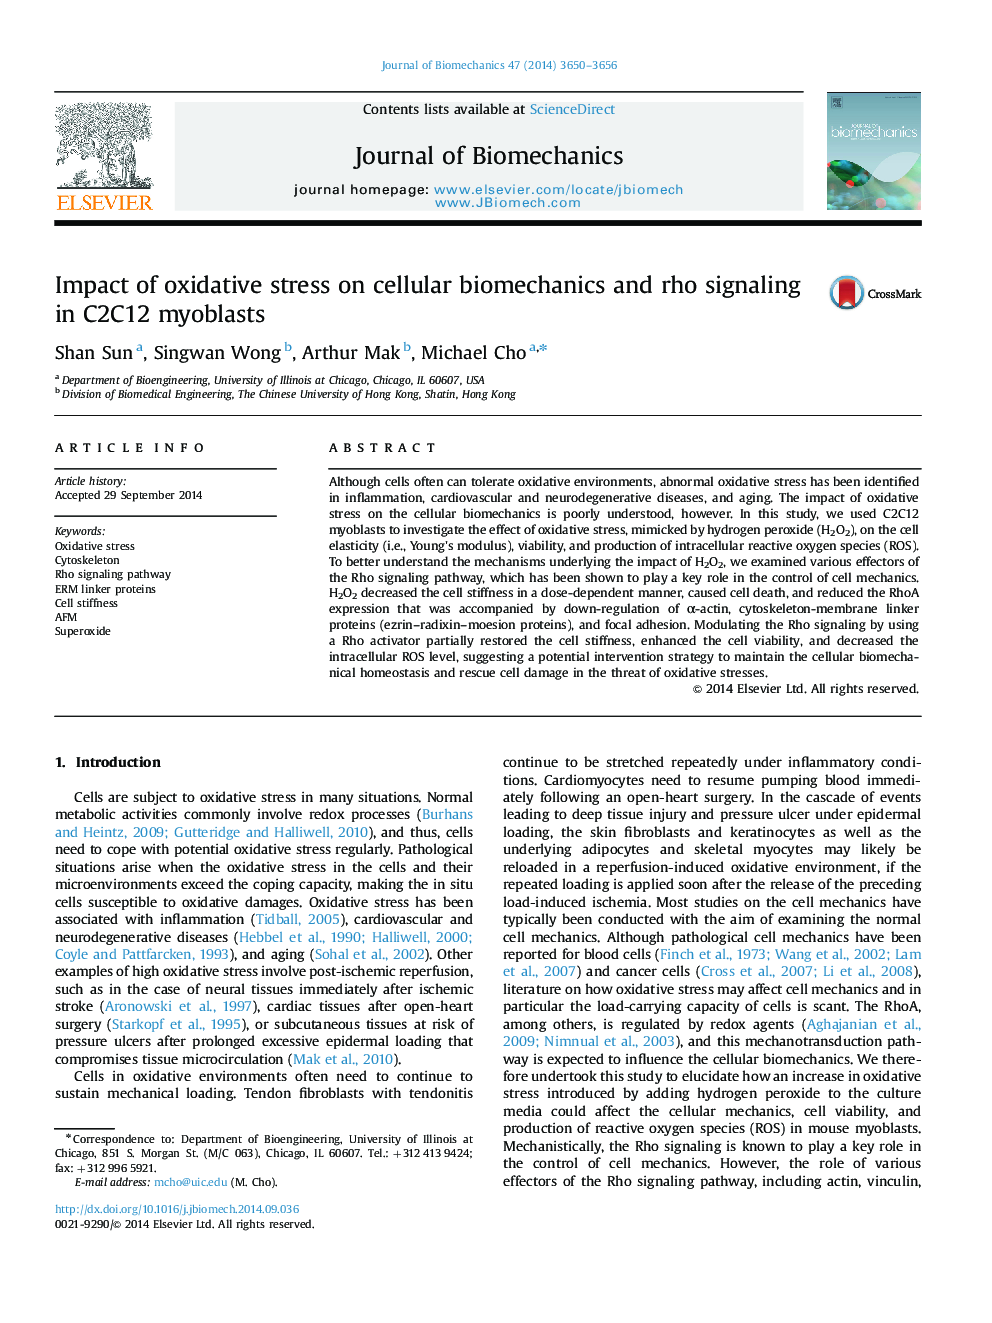 Impact of oxidative stress on cellular biomechanics and rho signaling in C2C12 myoblasts